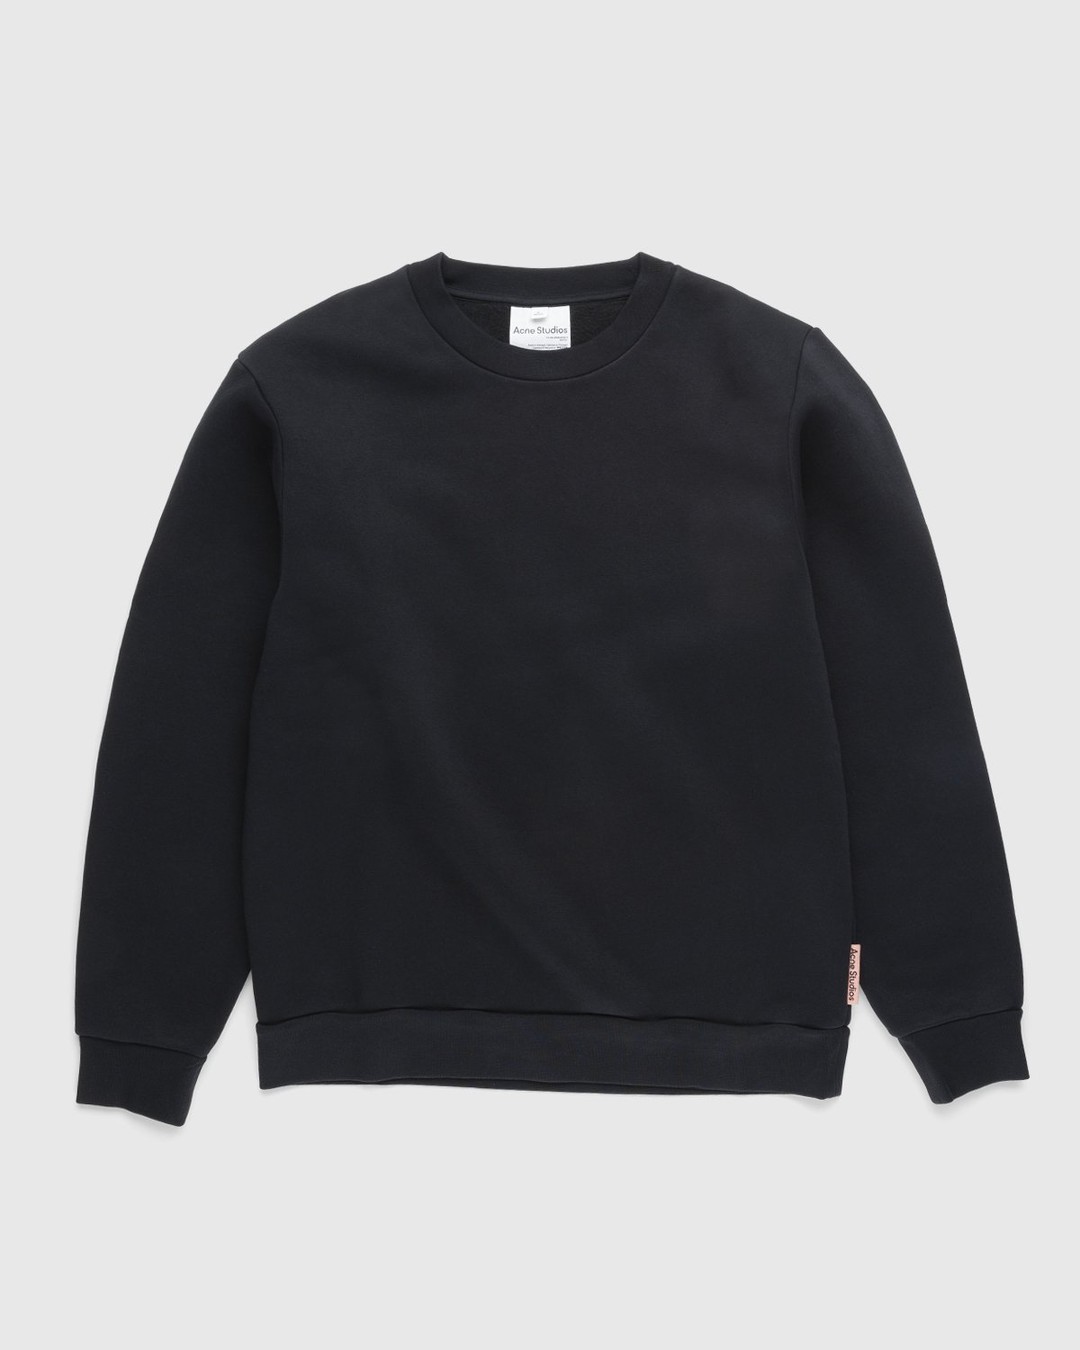 Acne Studios – Brushed Sweatshirt Black - Sweatshirts - Black - Image 1